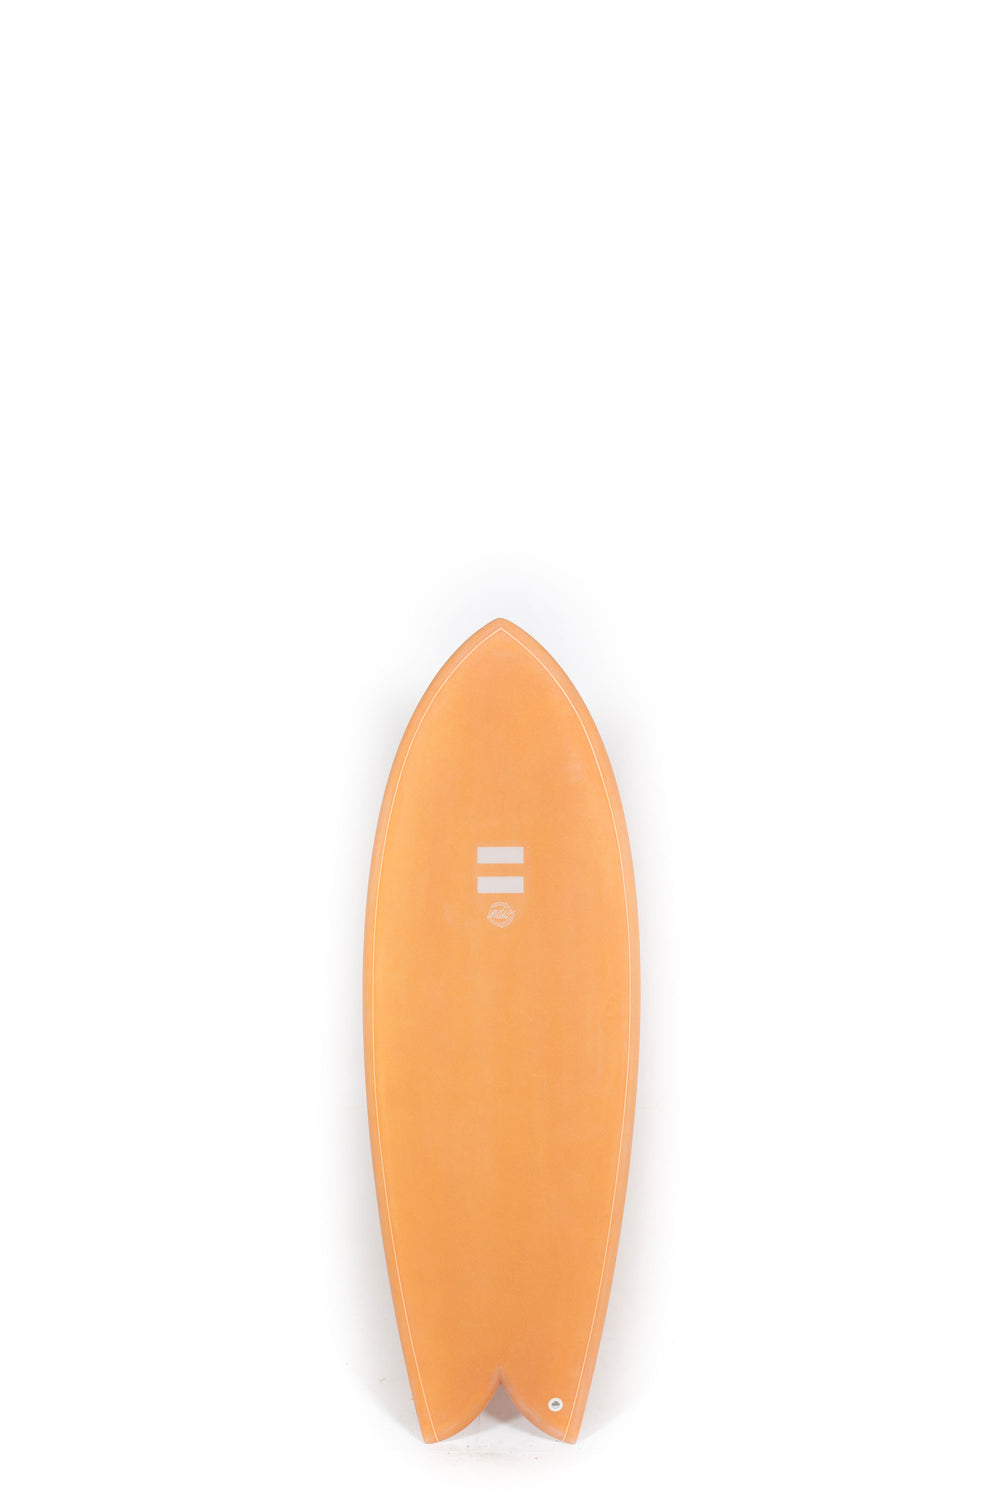 Pukas Surf Shop -  Indio Surfboards - DAB TERRACOTA FCS II - 5’3” x 20 3/4 x 2 3/8 x 30.92L.